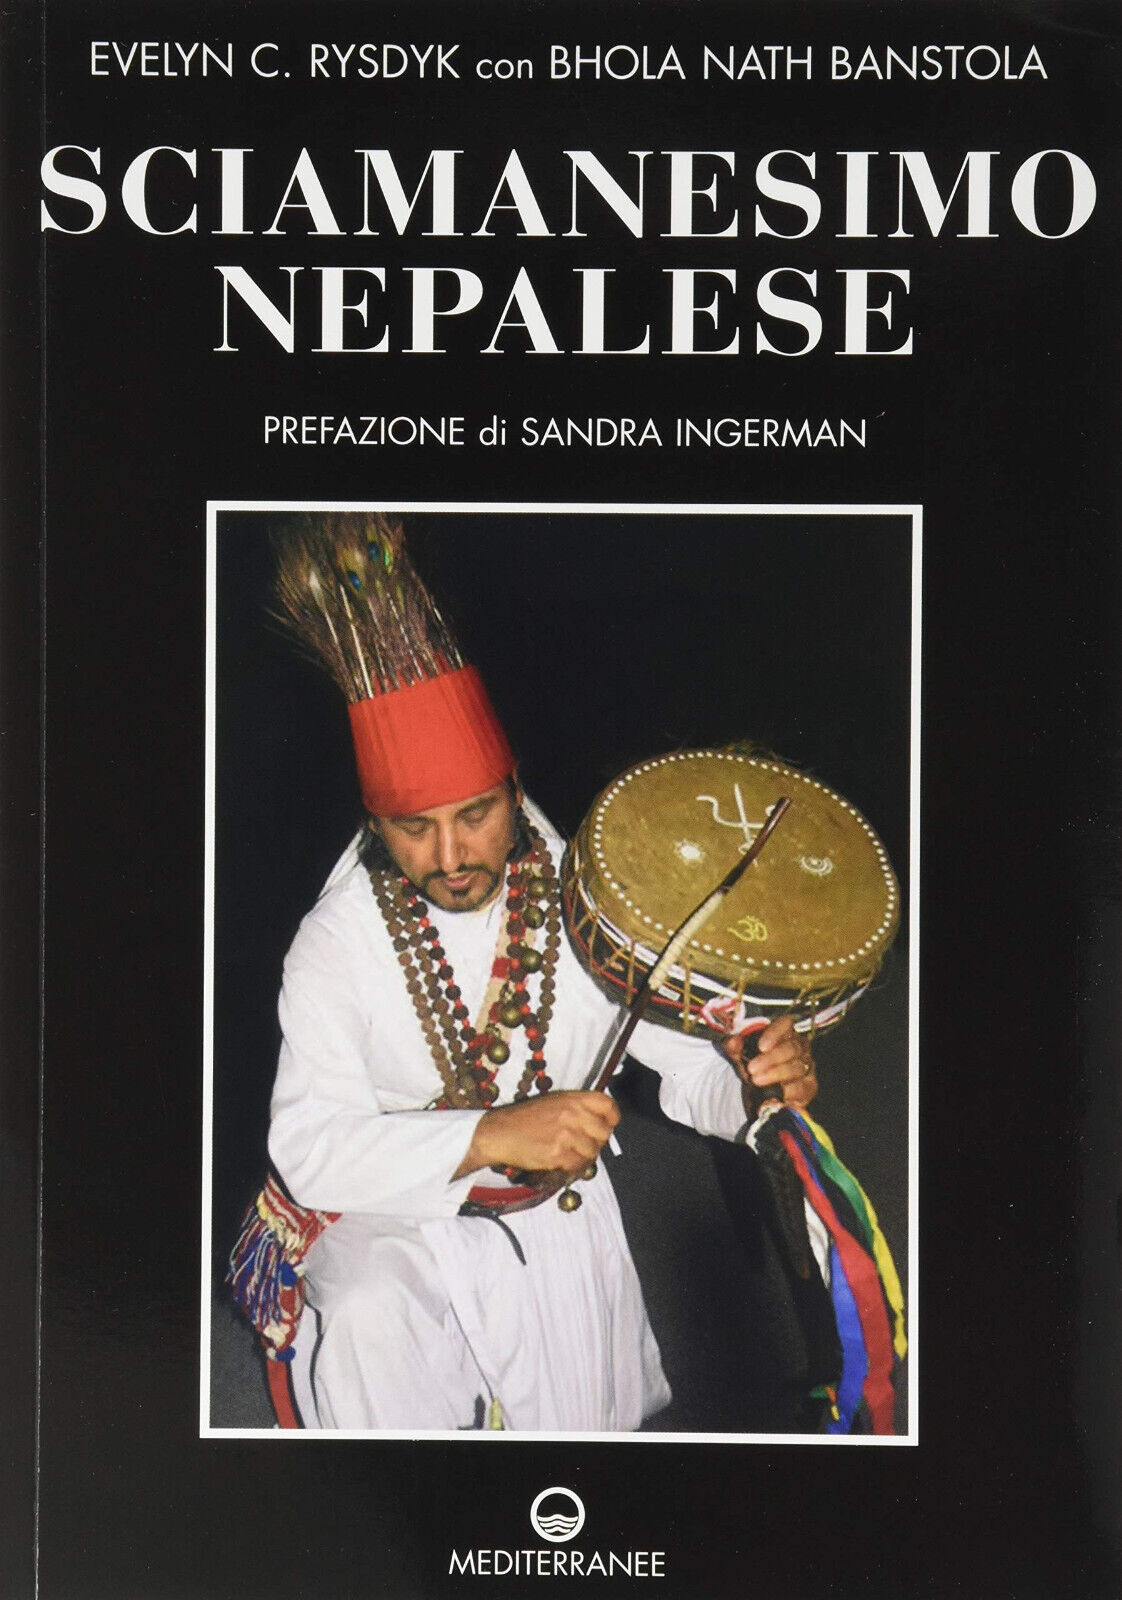 Sciamanesimo nepalese - Evelyn C. Rysdyk, Bhola Nath Banstola -Mediterranee,2020 libro usato